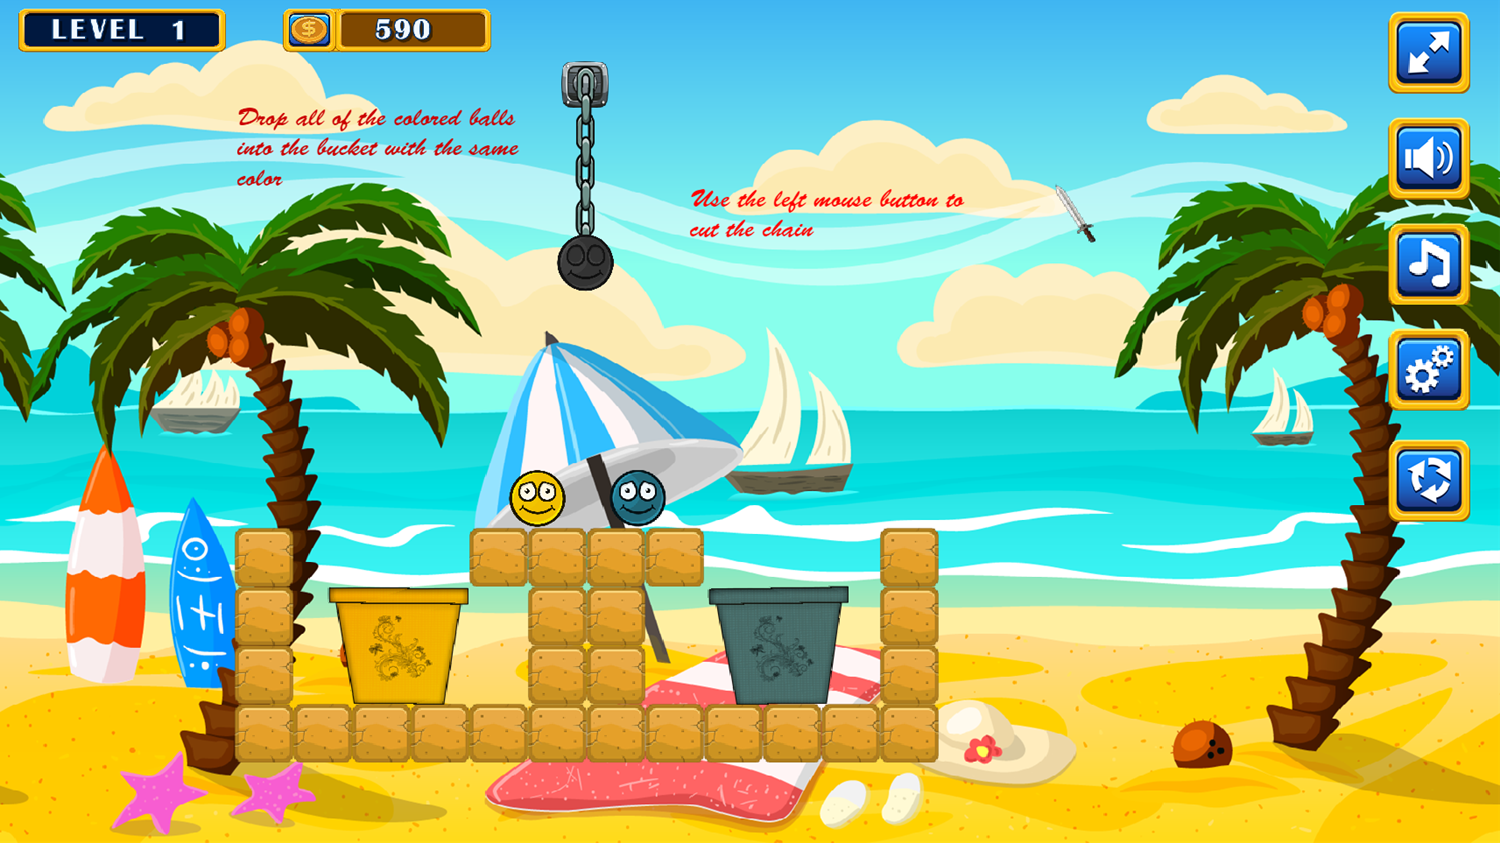 Beachball Fun Game Level Start Screenshot.